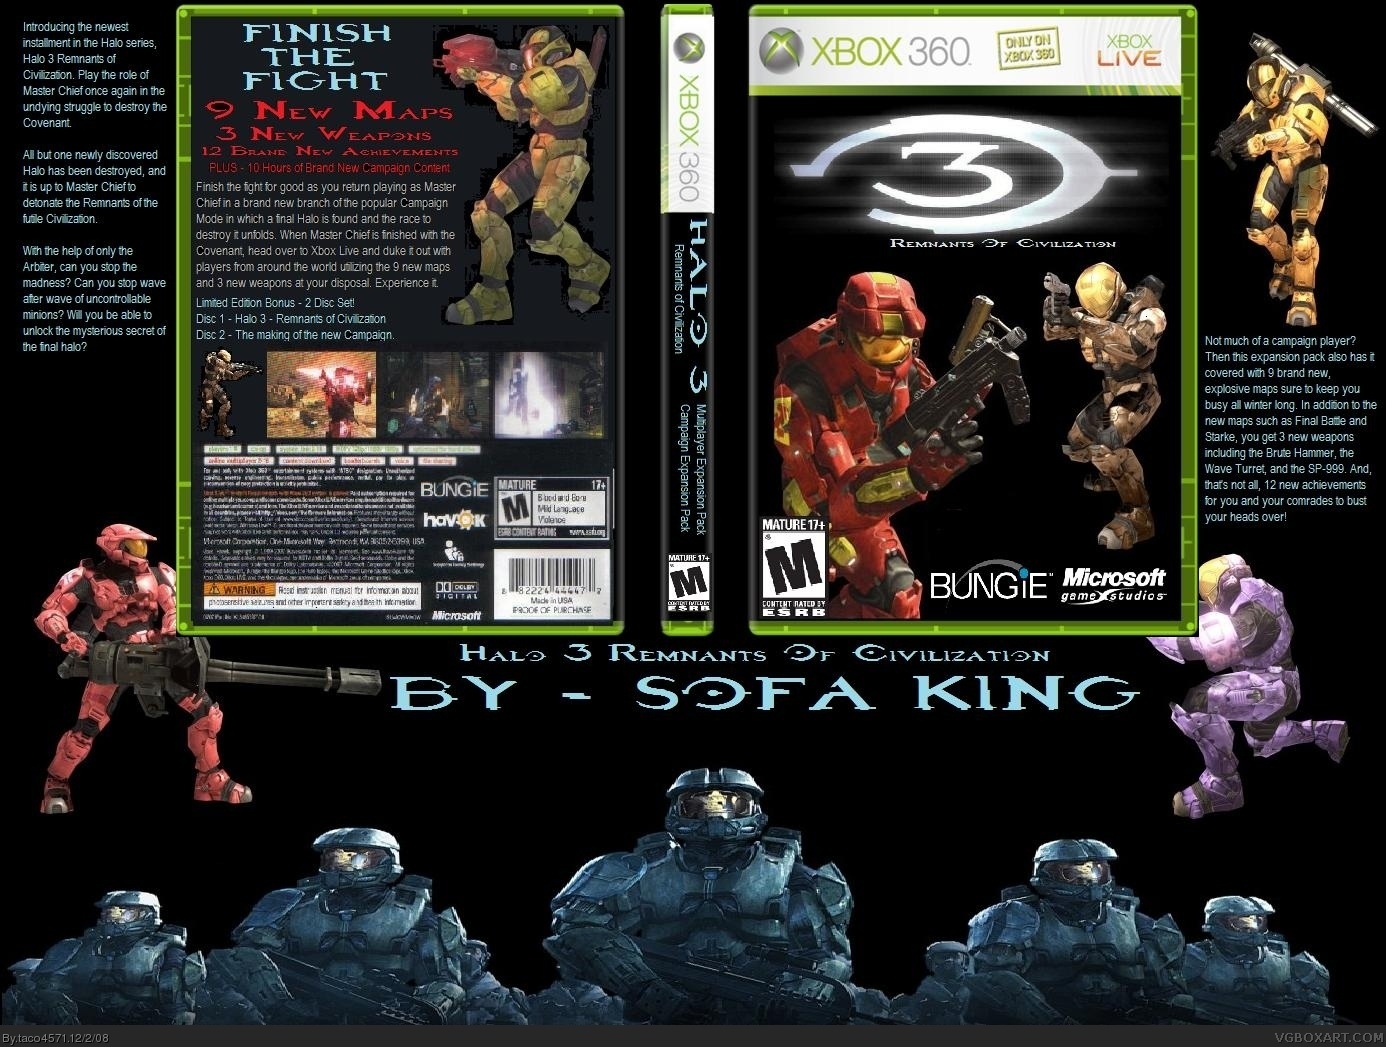 Halo 3 - Remnants of Civilization box cover